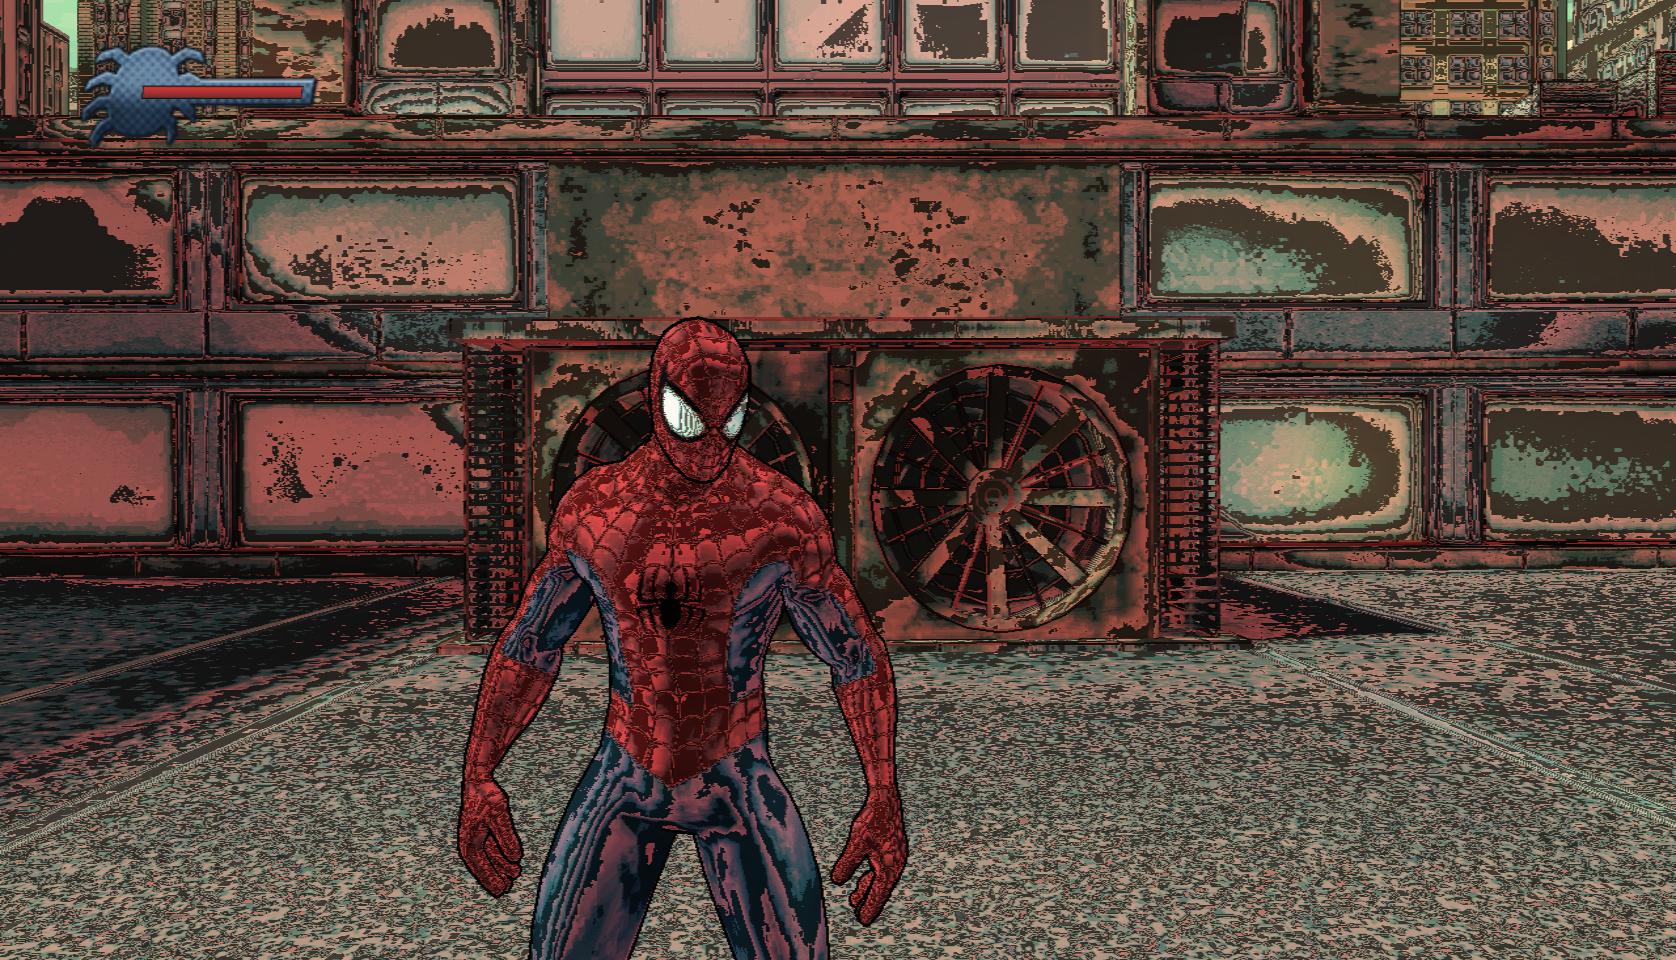 Spider-Man Web Of Shadow Wii Mod Texture Dolphin Emulator 